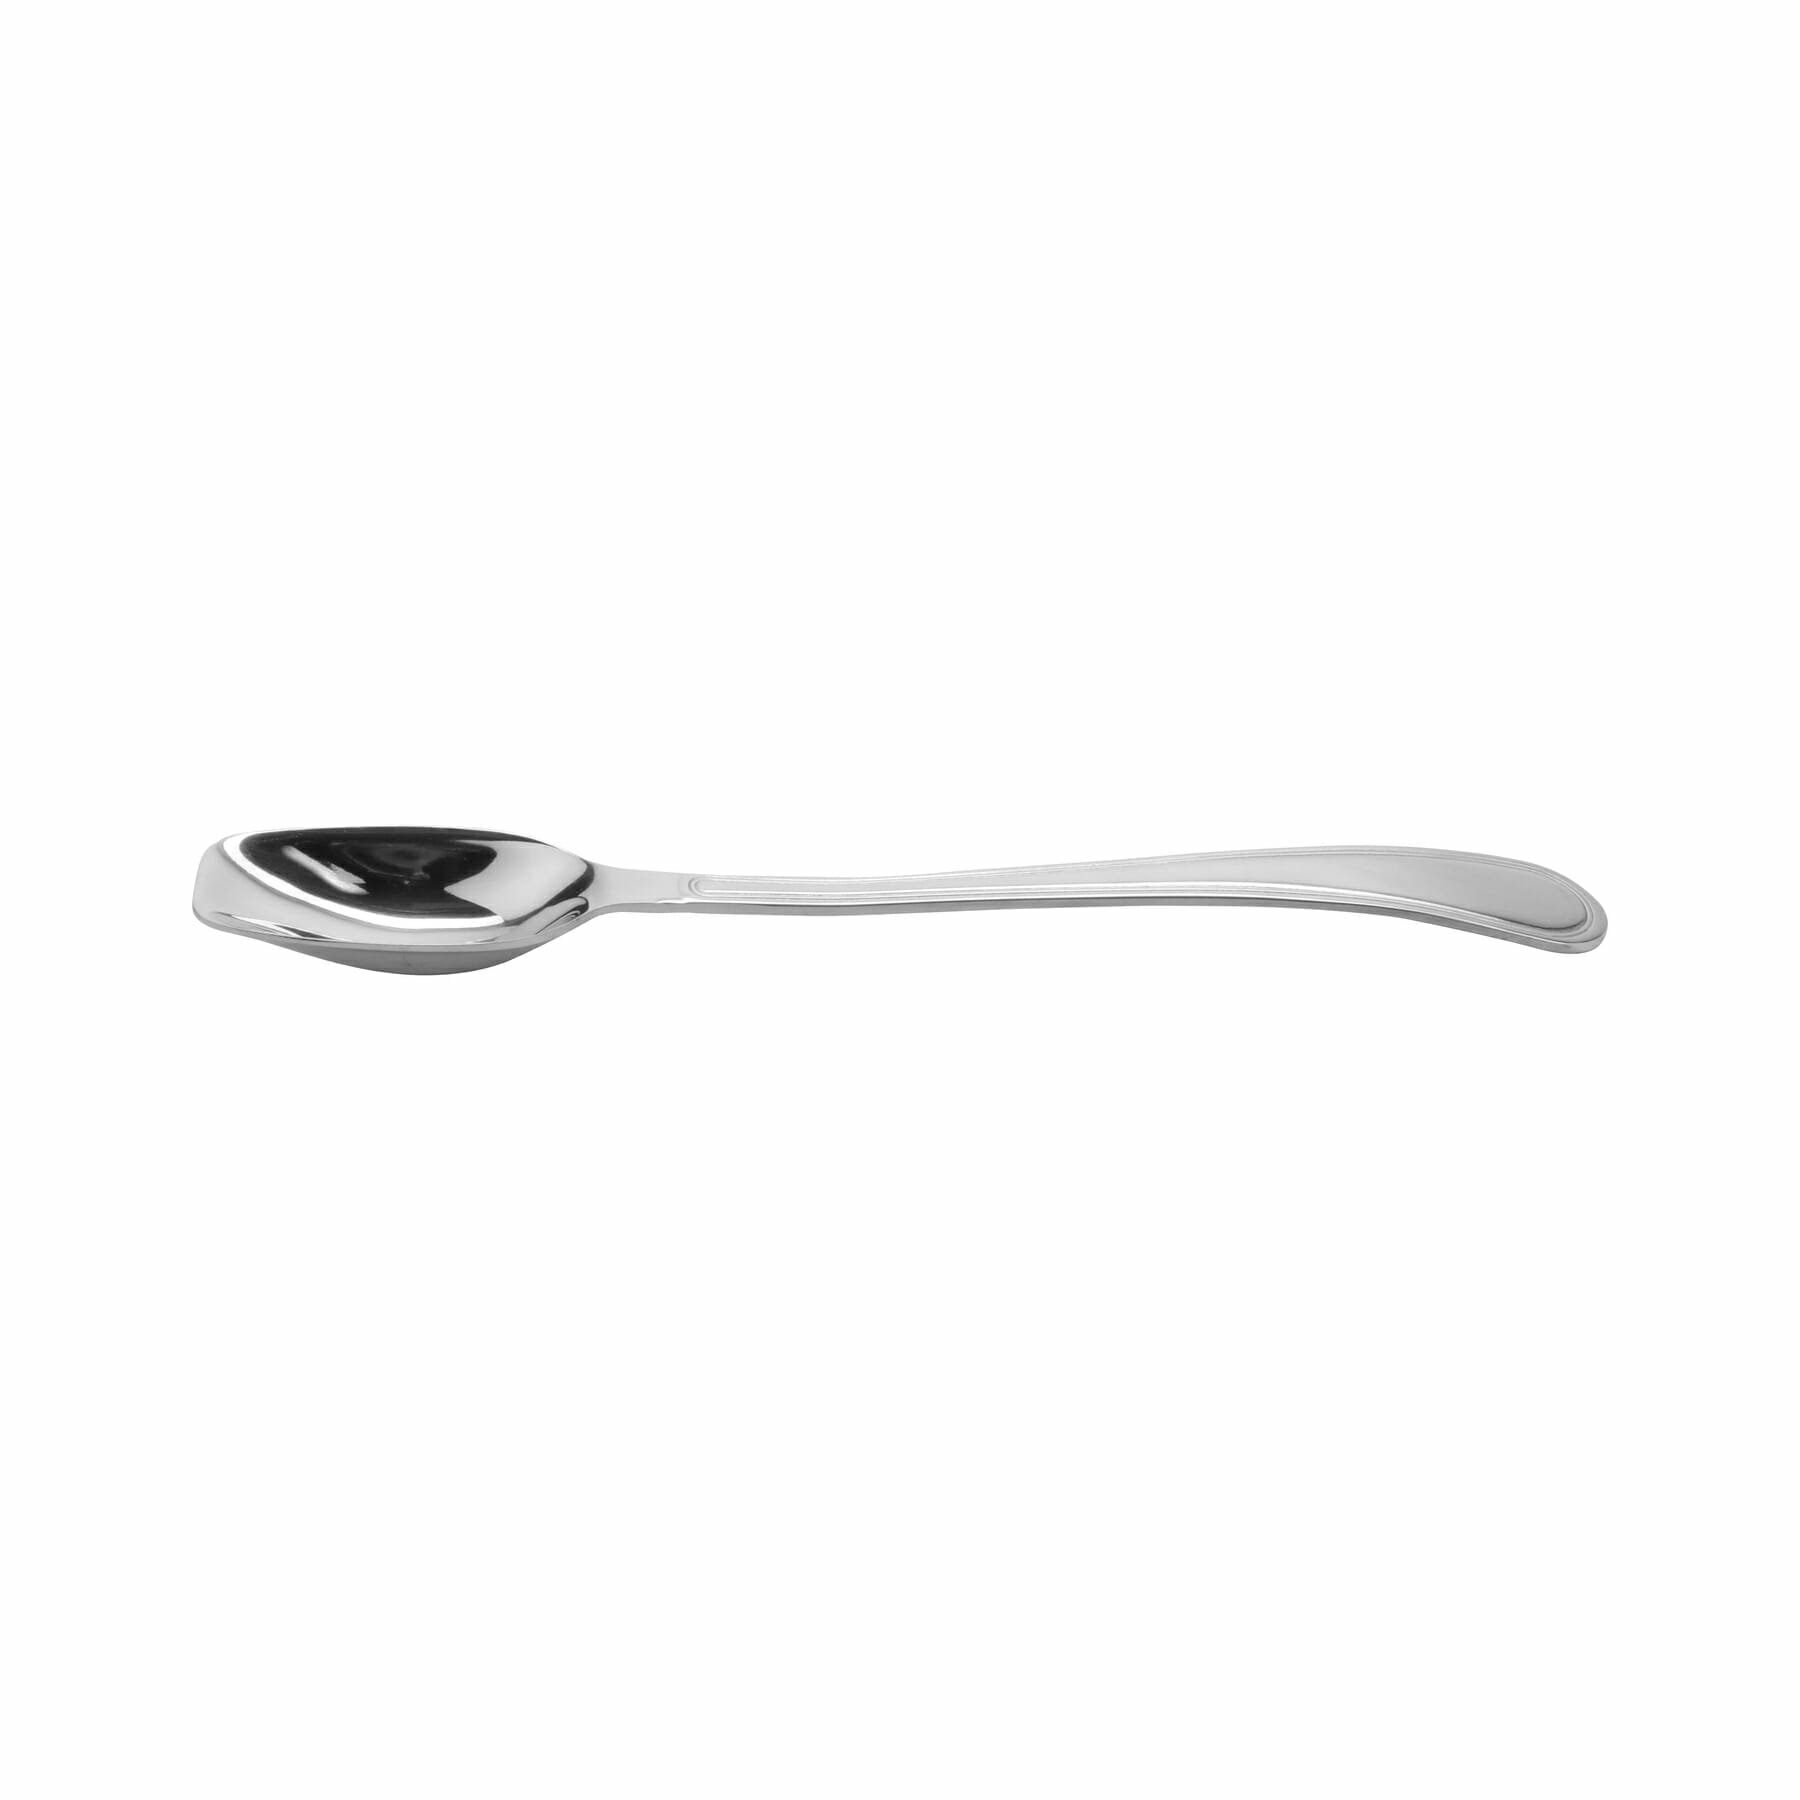 0.75 oz., 7.75" Stainless Steel Scoop Spoon w/ Mirror Finish